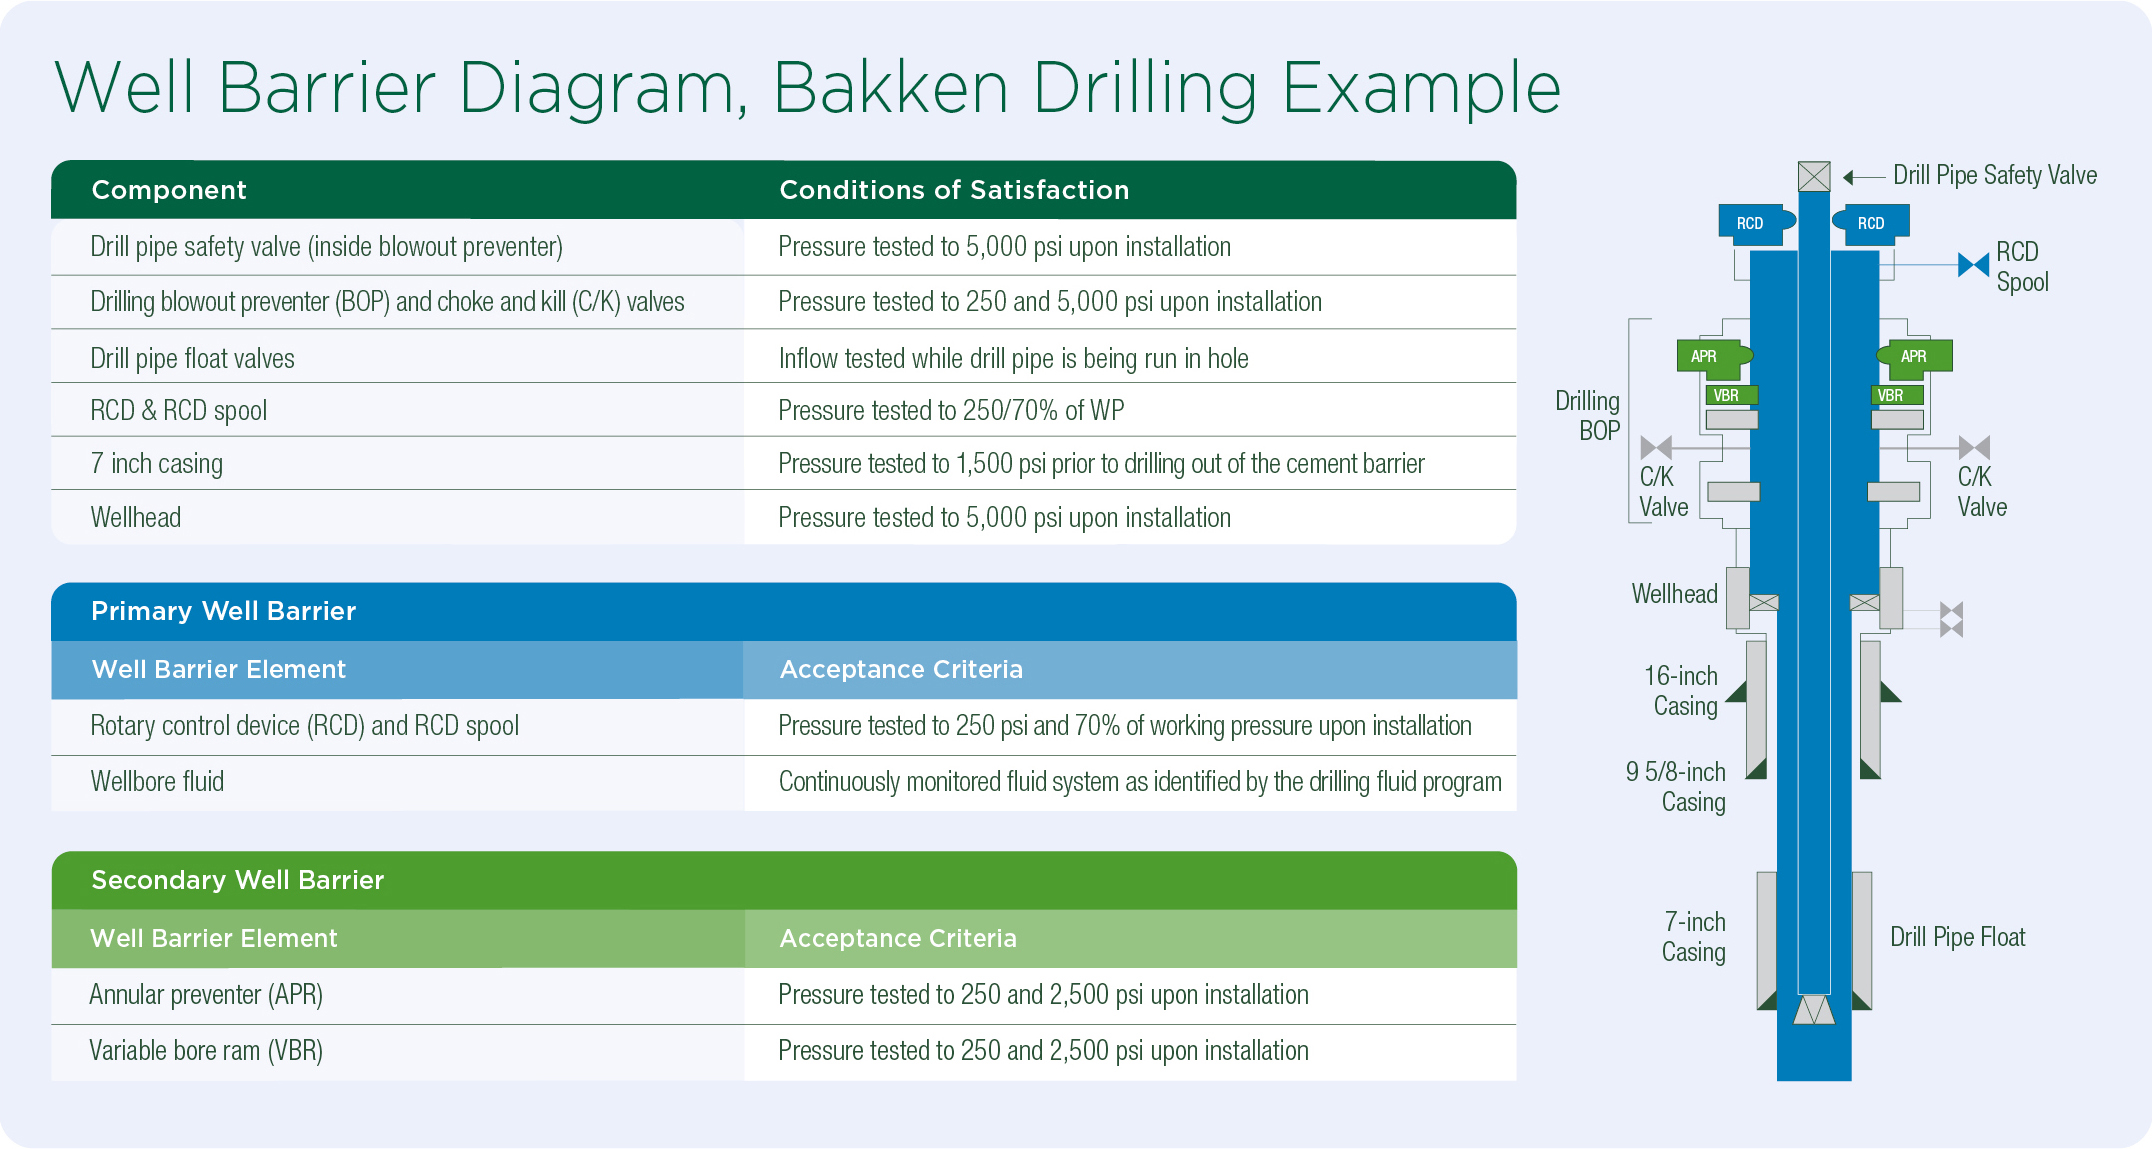 Well Barrier Diagram_Bakken Drilling